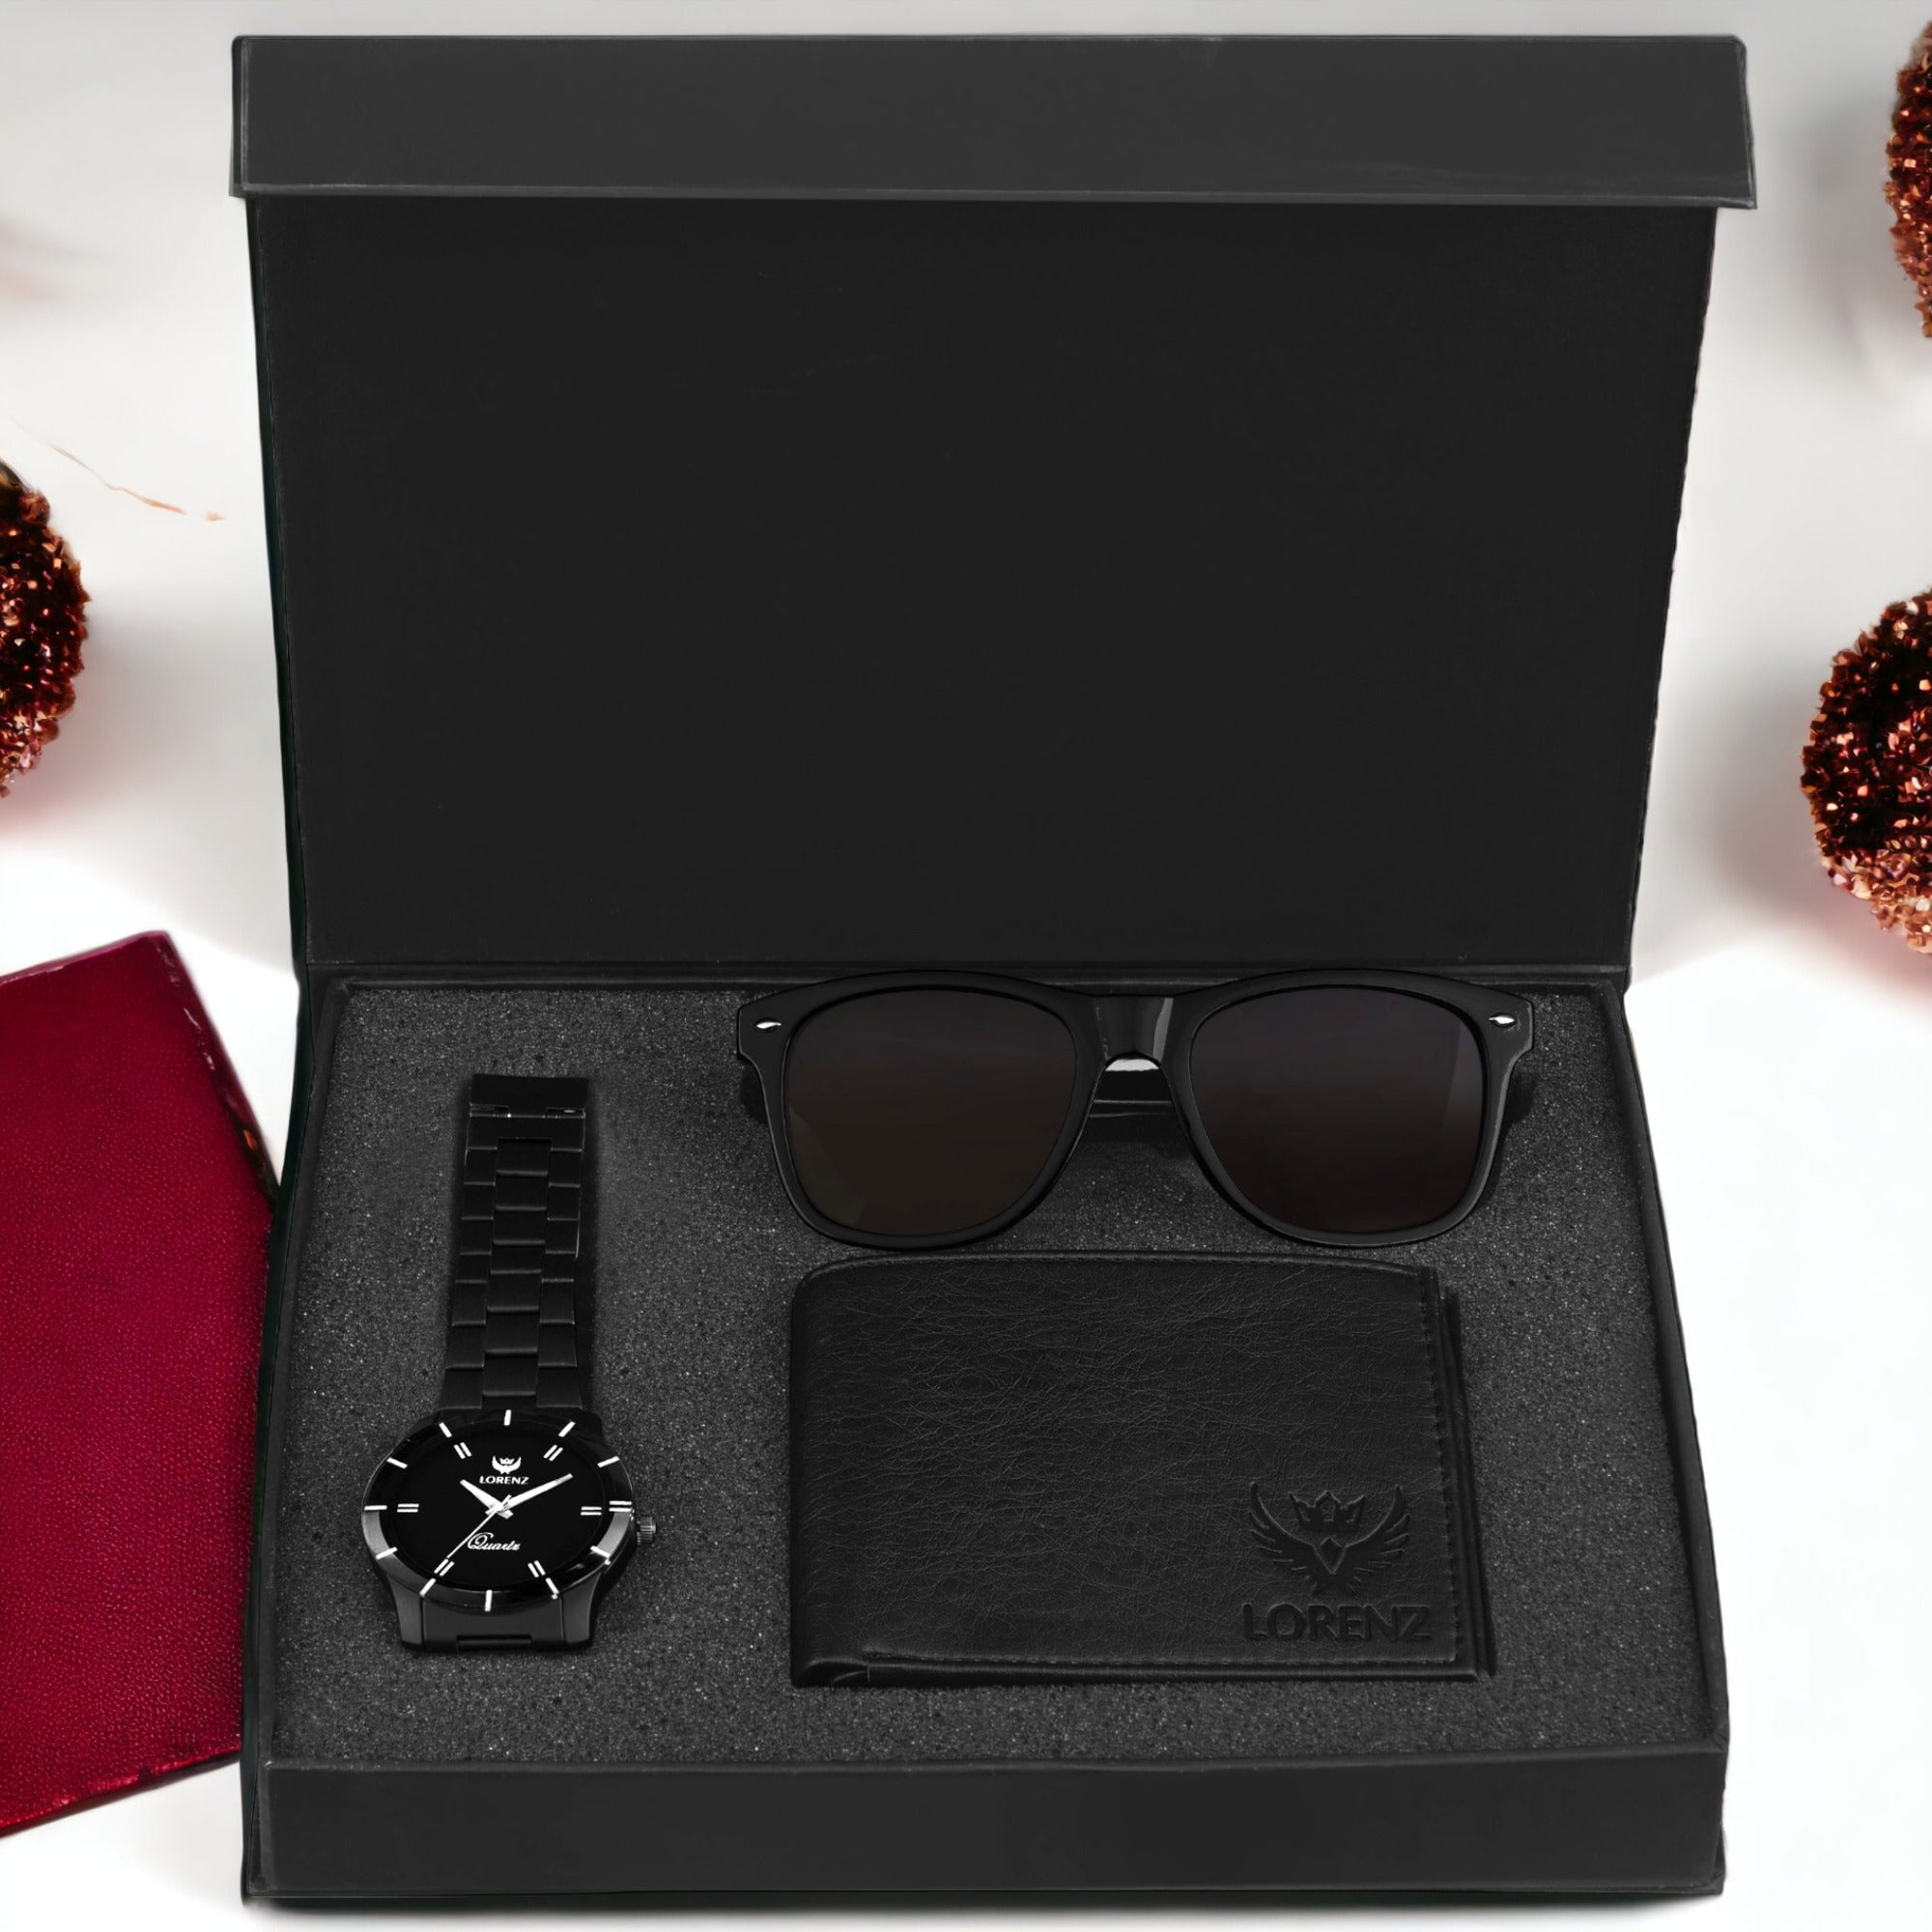 orenz Men's Black Watch, Wallet & Sunglasses Gift Set 